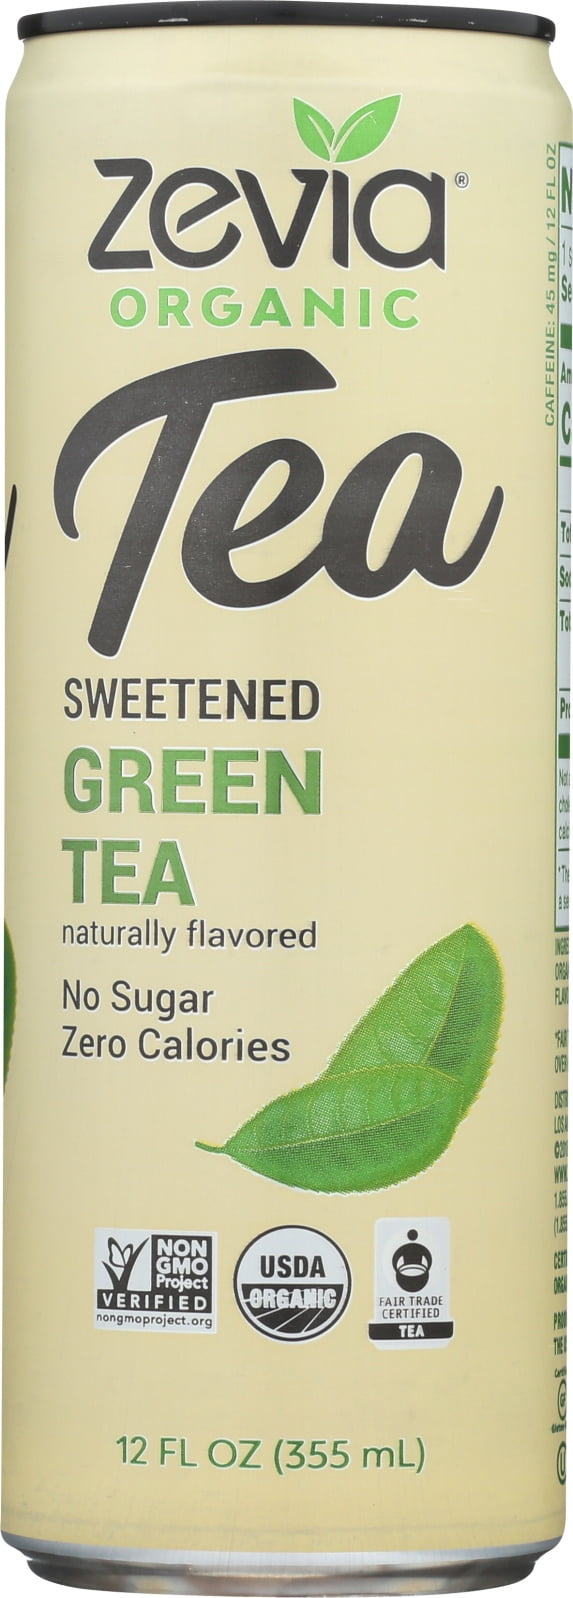 Zevia Sweetened Green Tea 12 Fl Oz Can